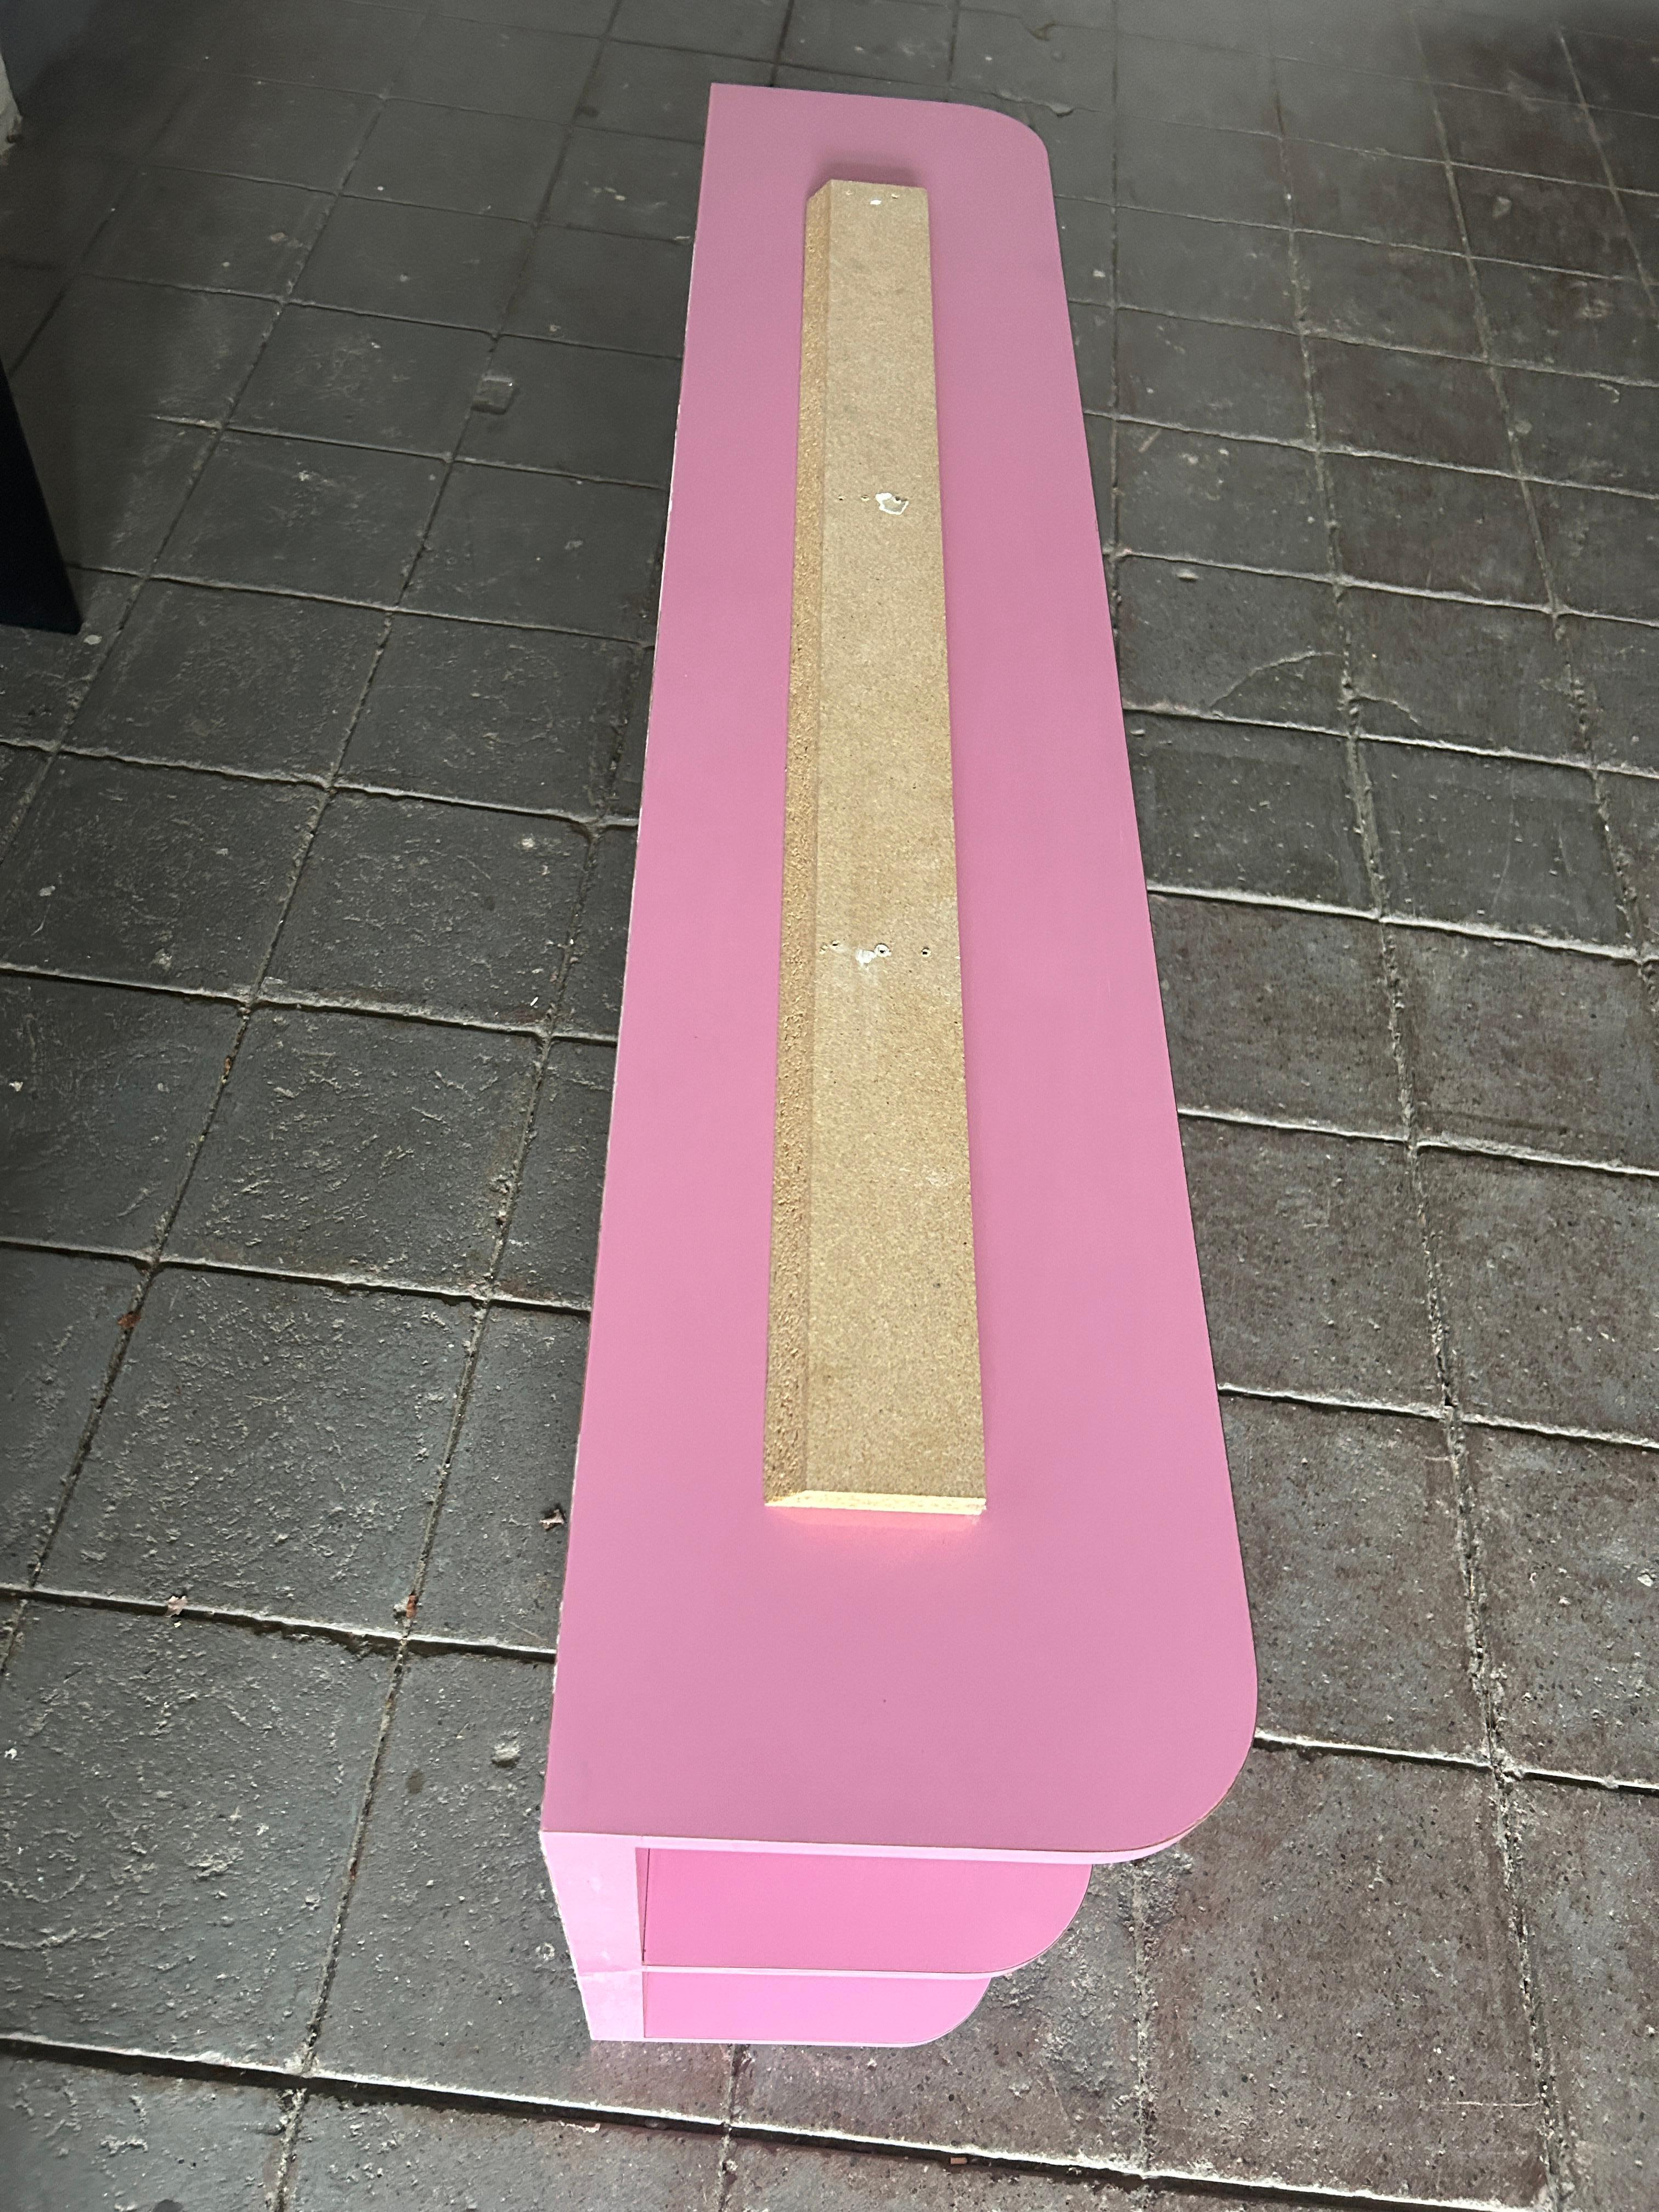 Woodwork Pop art Post modern Pink Gloss Laminate floating wall mounted shelf unit For Sale